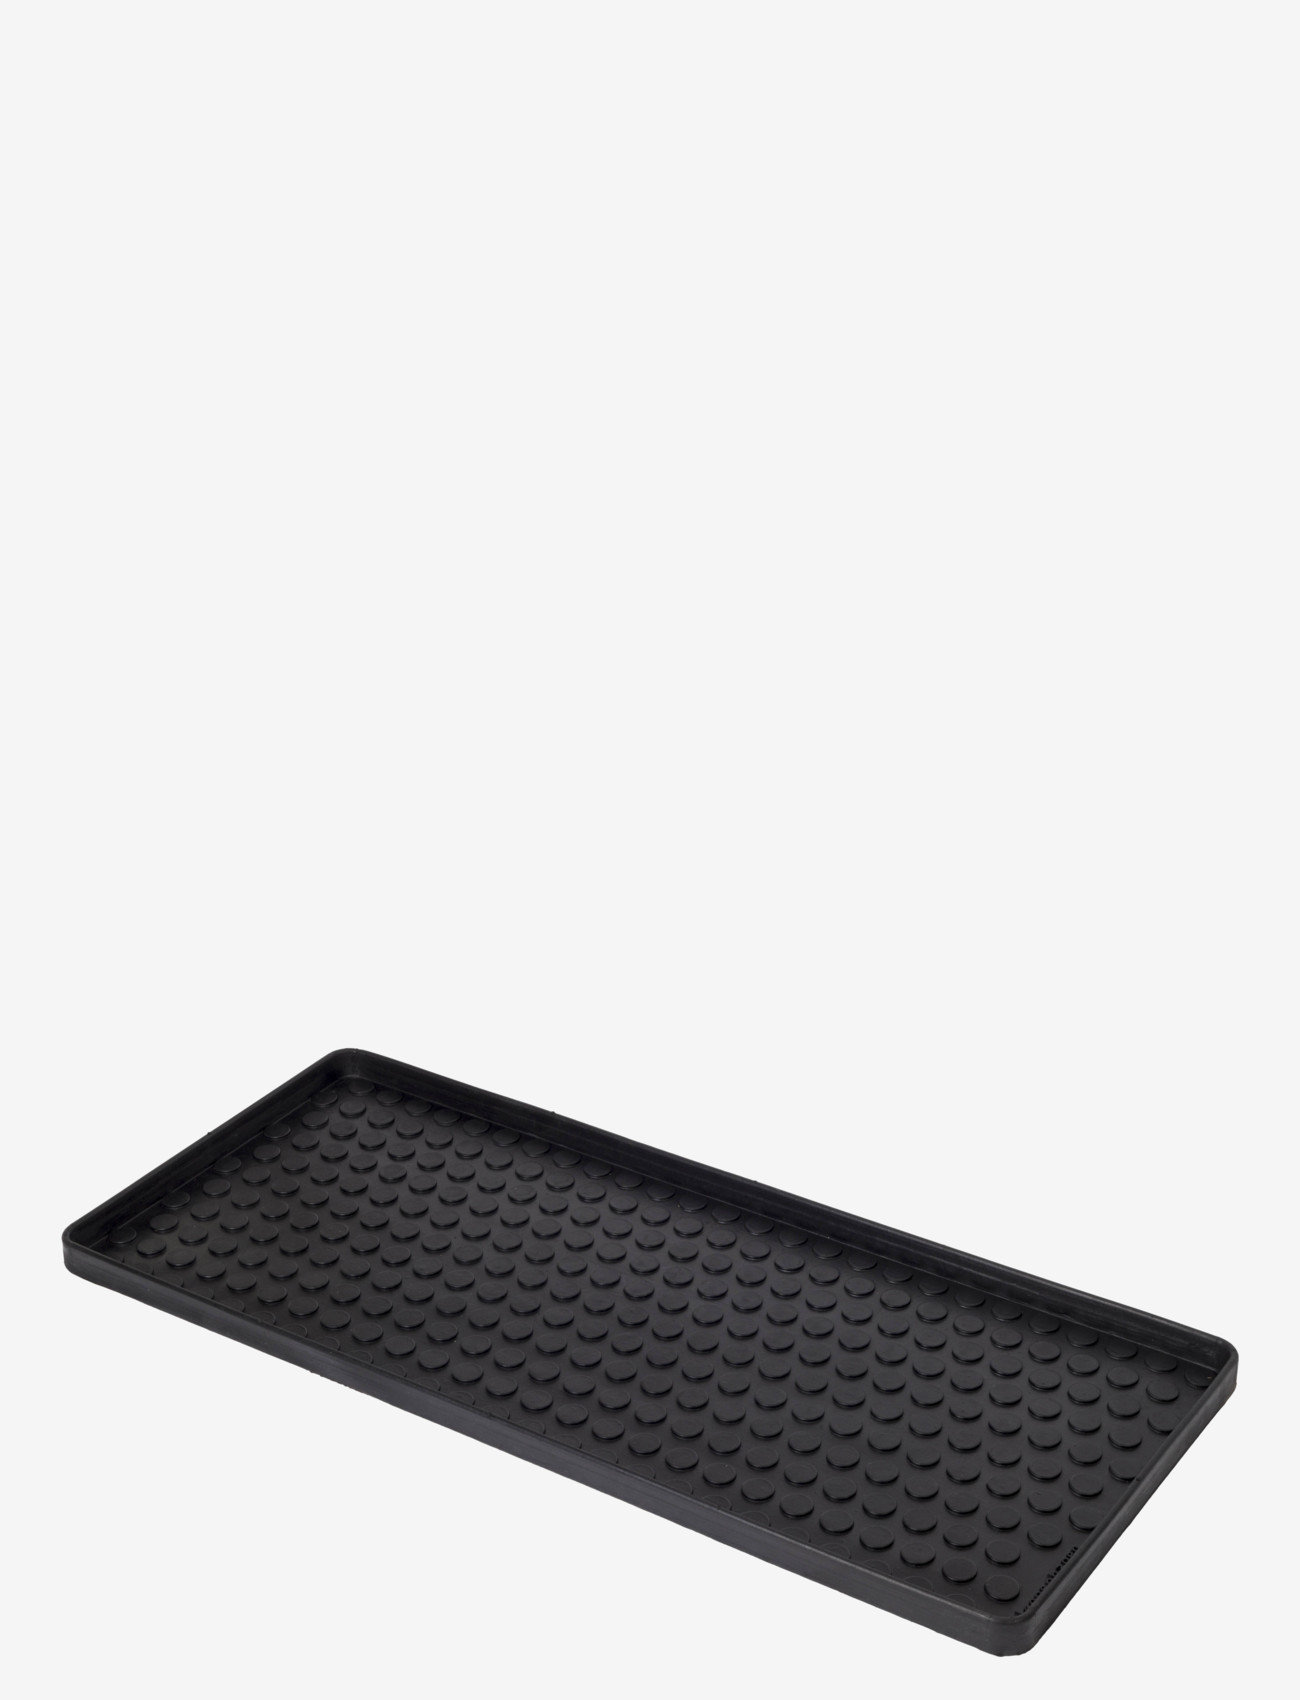 tica copenhagen - Shoe and boot tray rubber, L:88x38x3 cm - home - dot design - 1